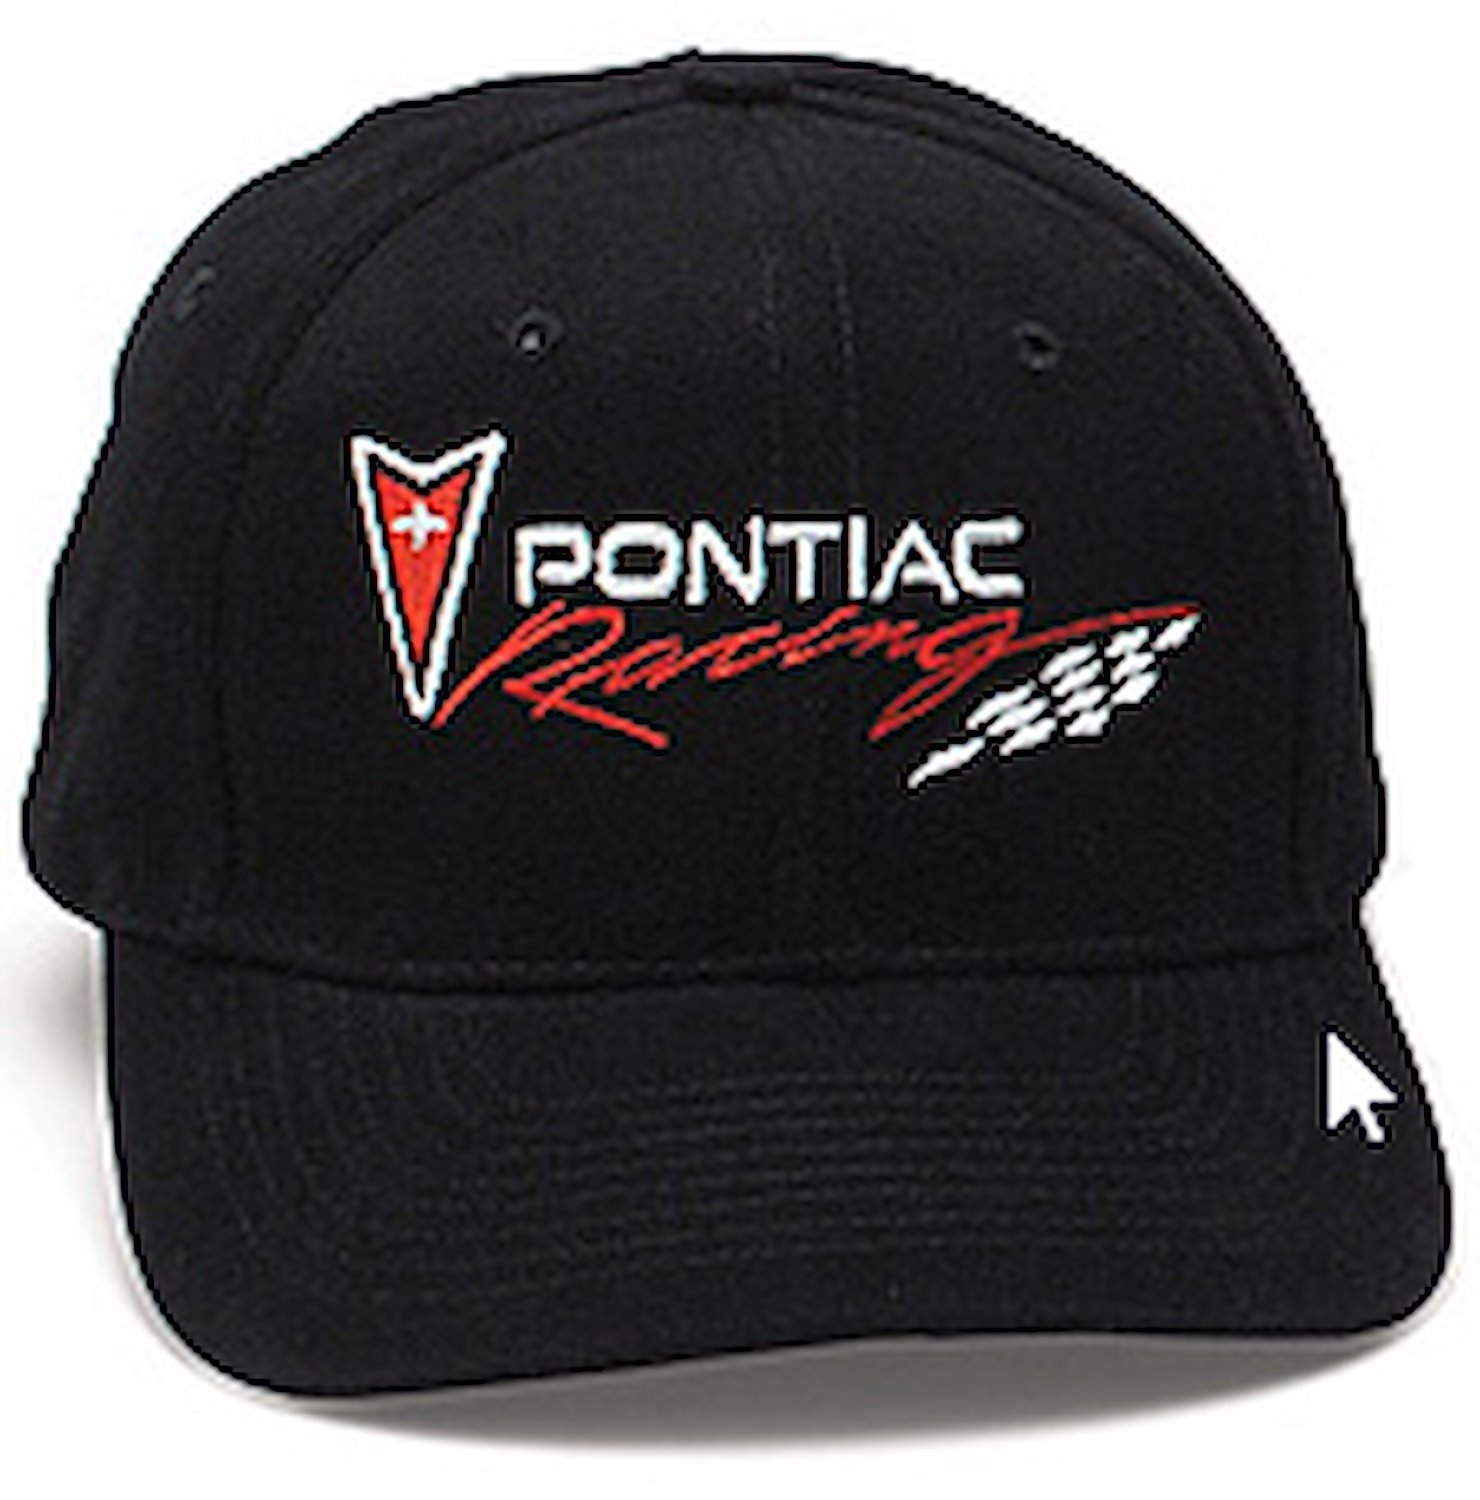 JEGS H105 Pontiac Racing Hat